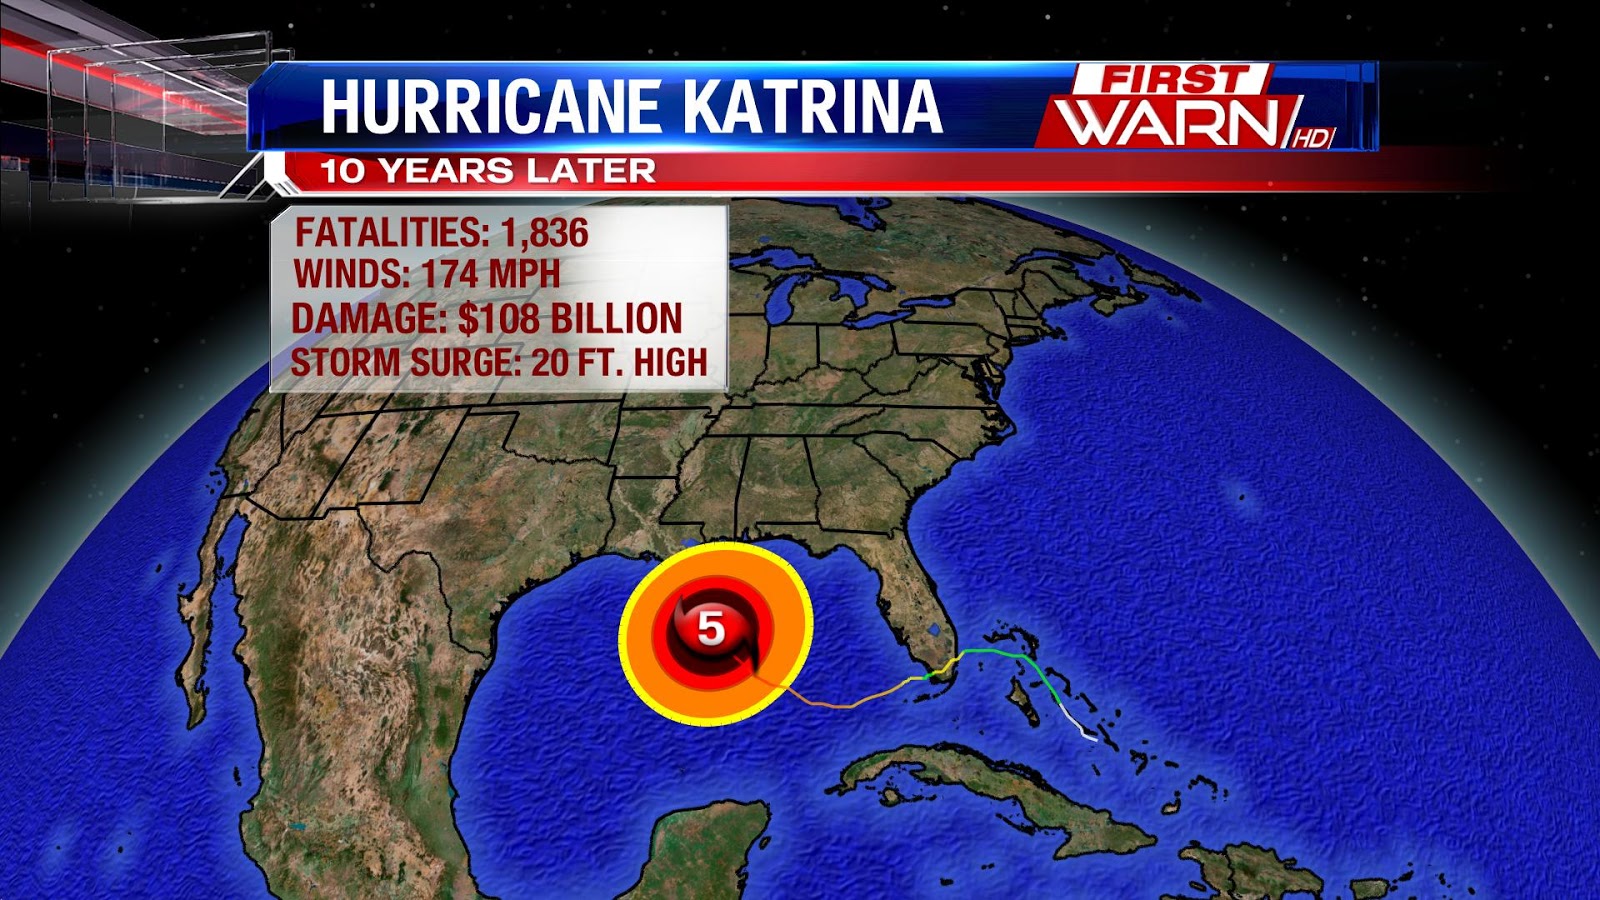 First Warn Weather Team: Hurricane Katrina: 10 Years Later